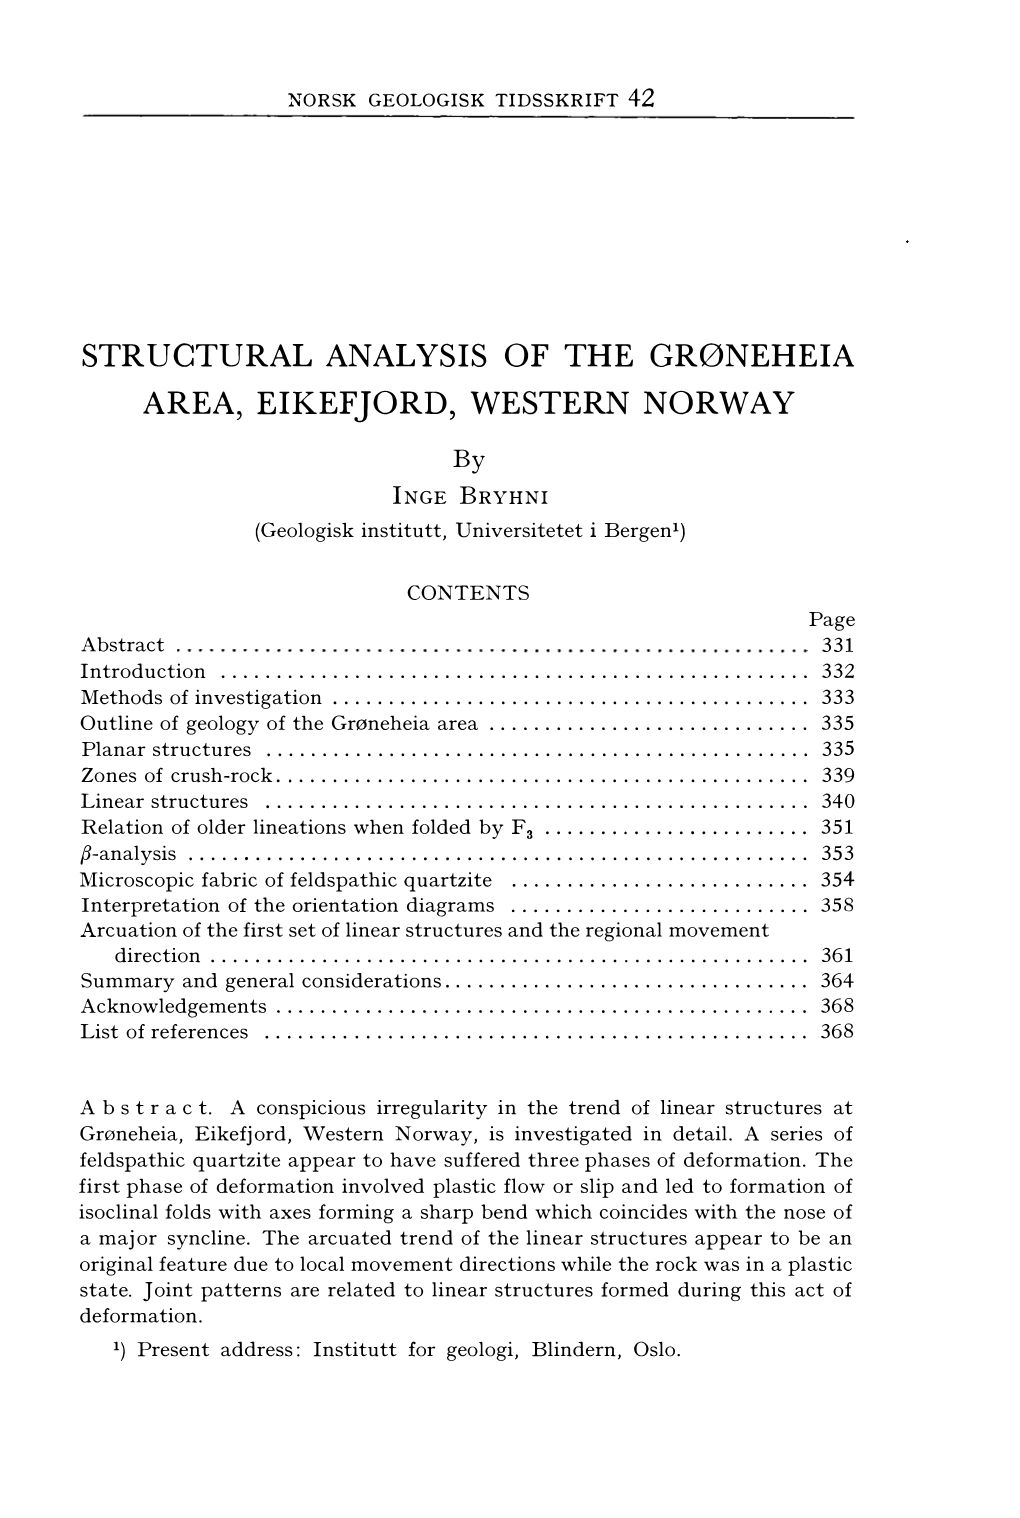 Structural Analysis of the Grøneheia Area, Eikefjord, Western Norway